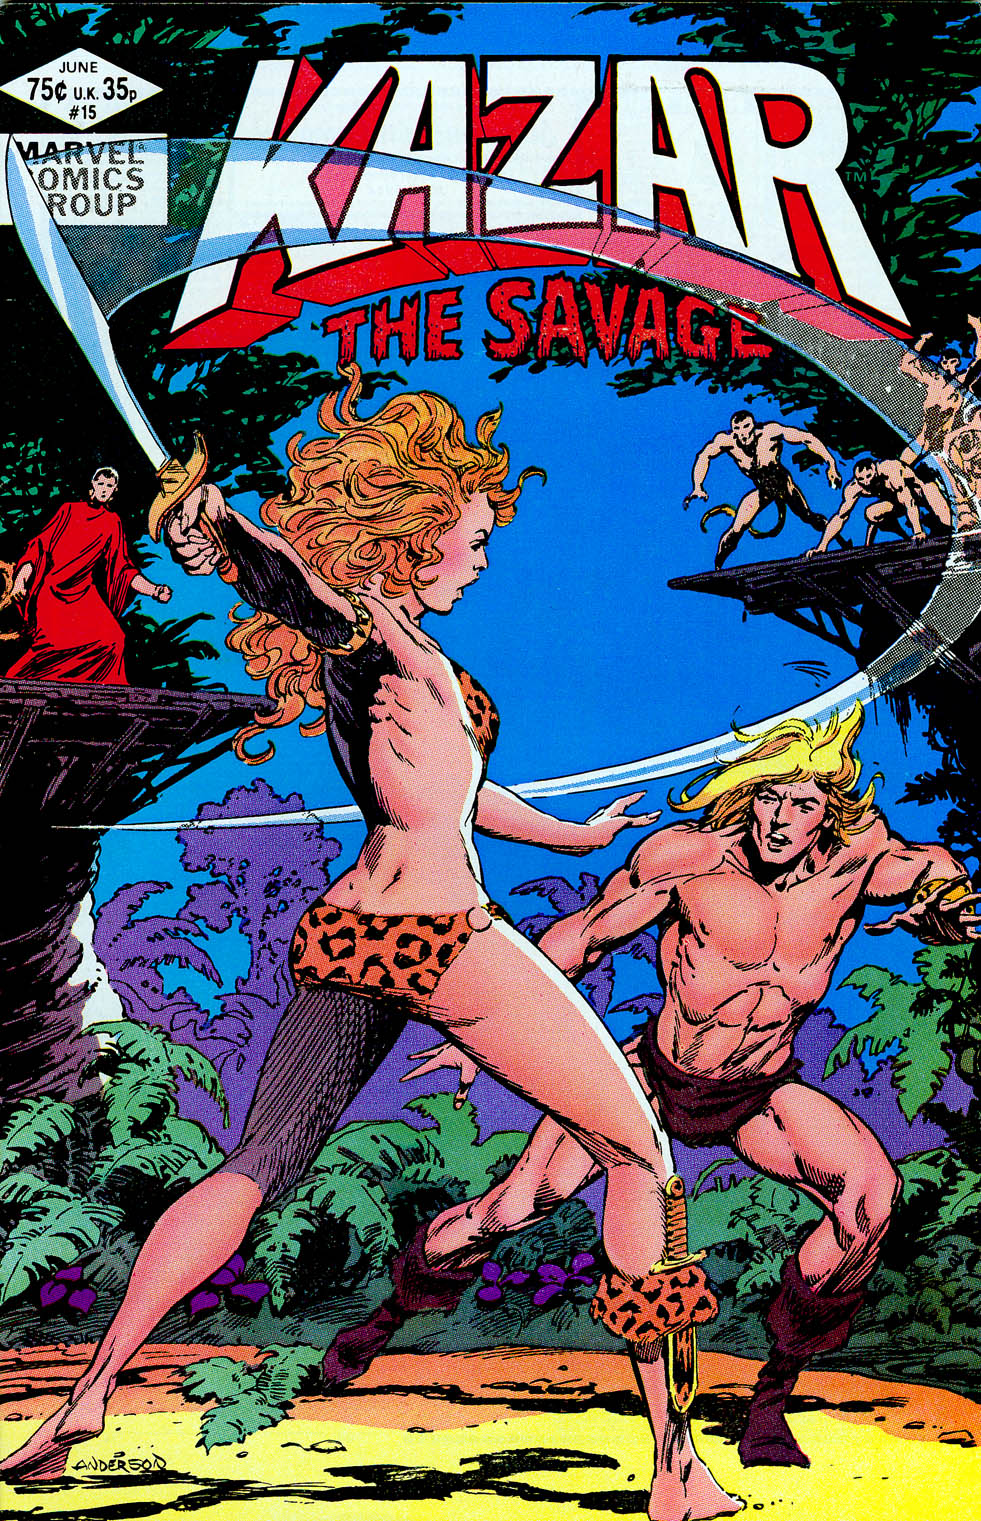 Ka-Zar the Savage issue 15 - Page 1